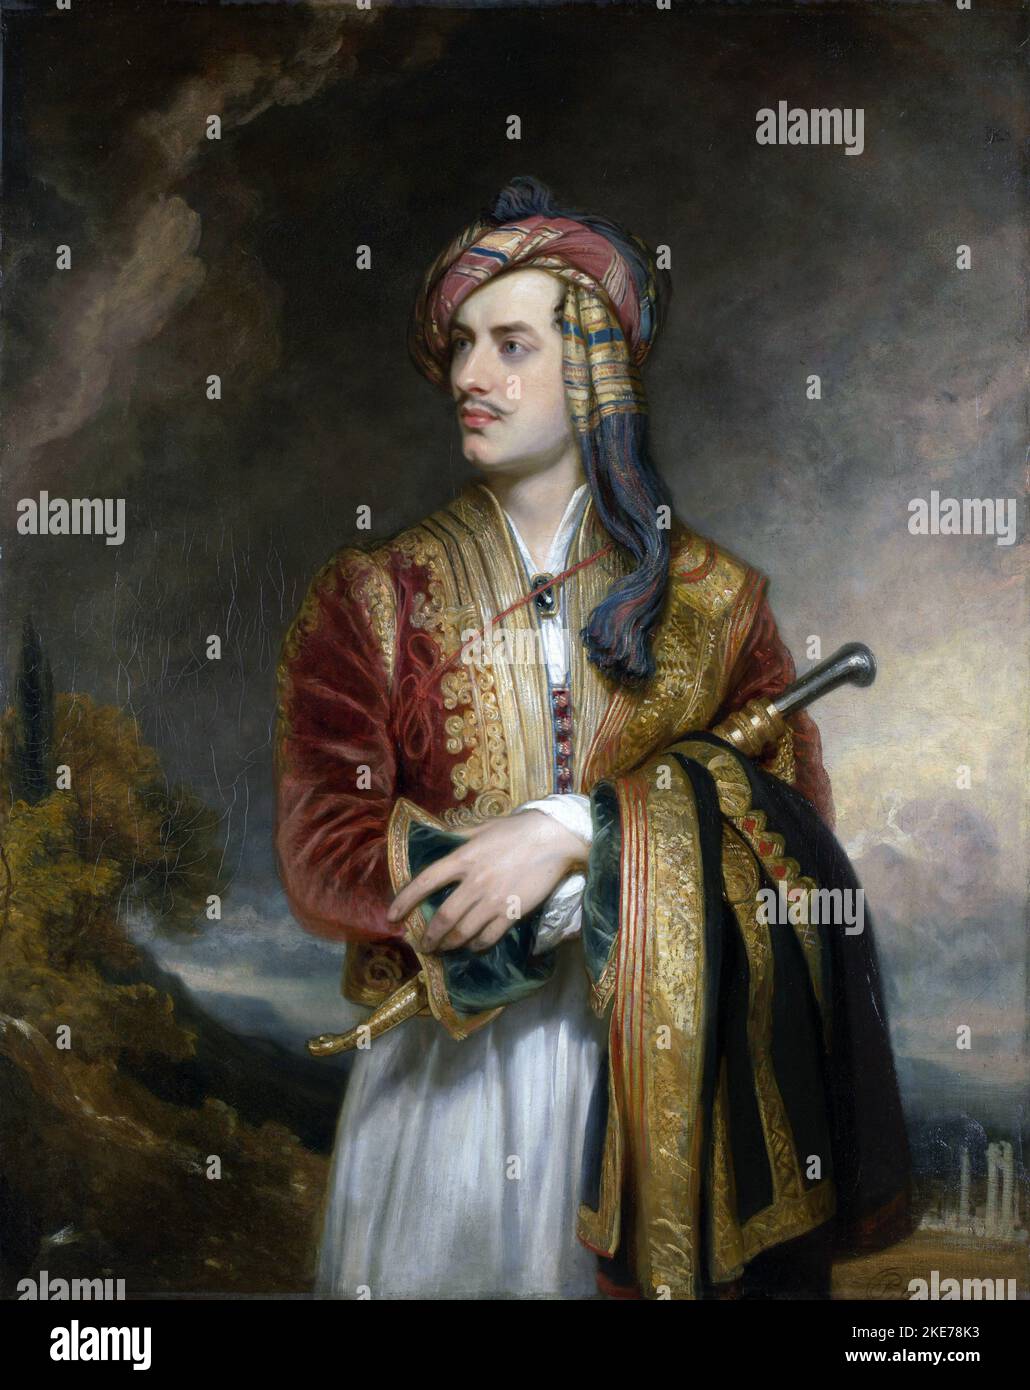 Lord Byron en robe albanaise par Thomas Phillips, 1813. George Gordon Byron, 6th Baron Byron (1788 – 1824), Lord Byron, était un poète anglais Banque D'Images